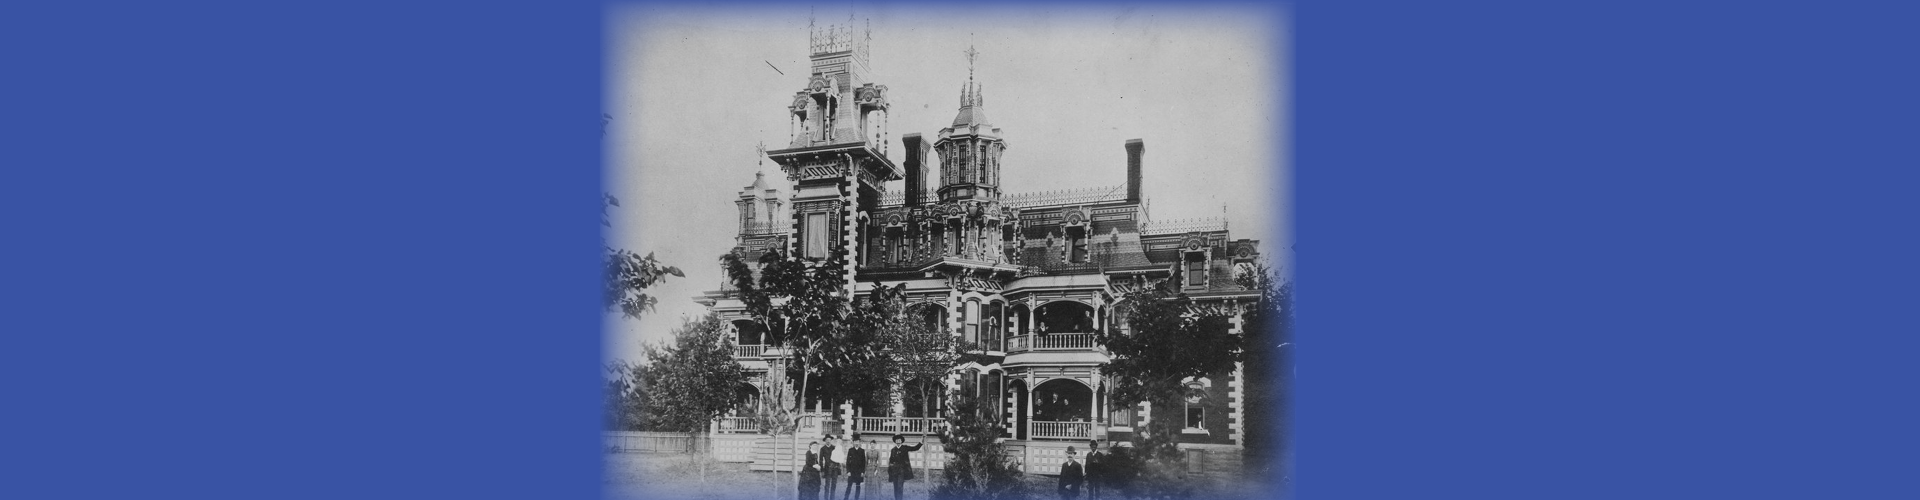 black & white photo of elaboarate mansion